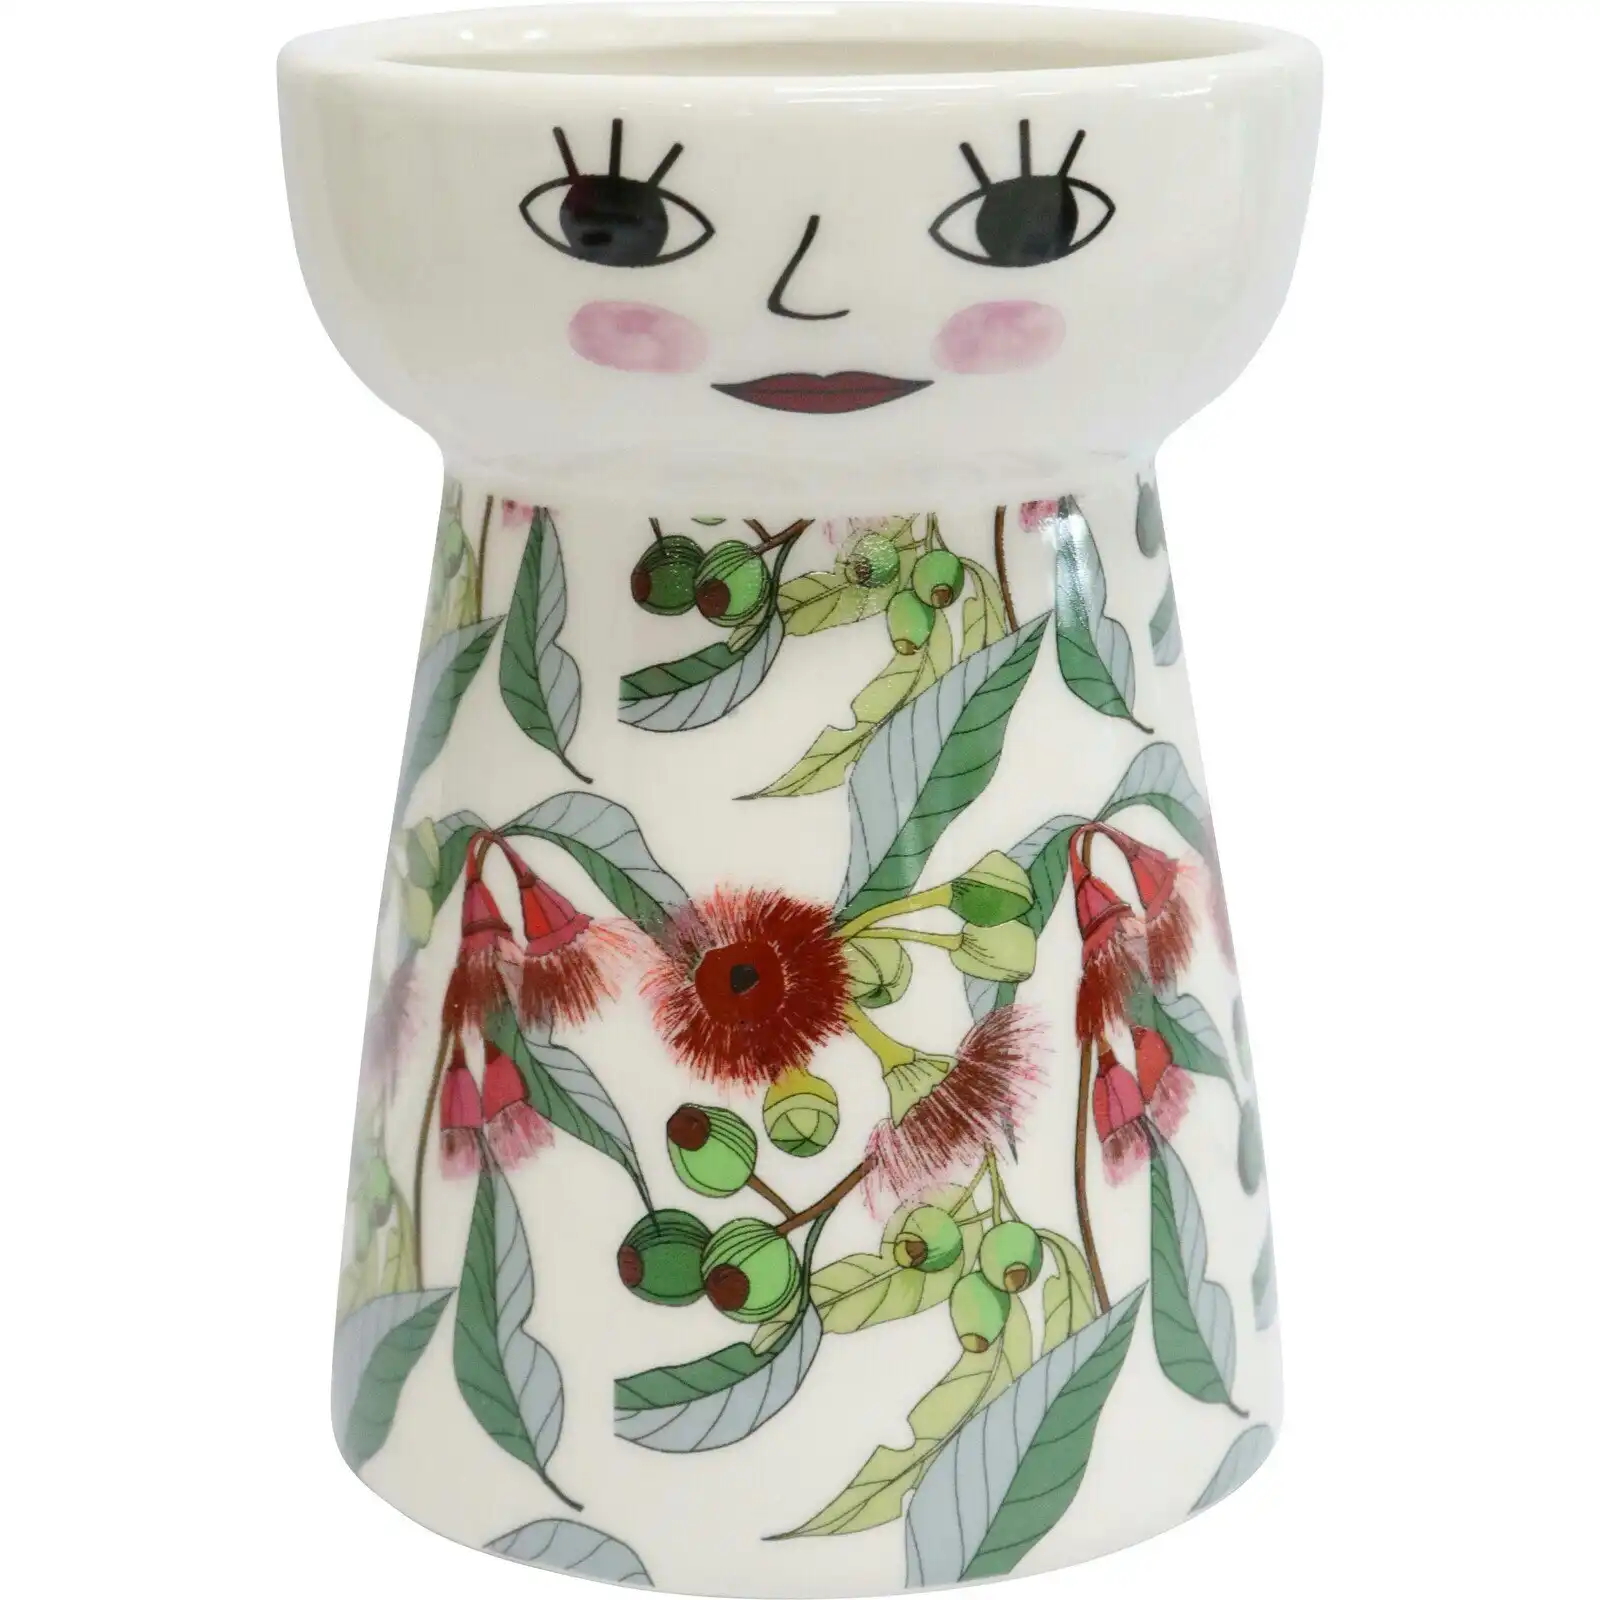 LVD Ceramic Doll Vase Home Tabletop Decorative Display 16cm Gum Nut Flowers